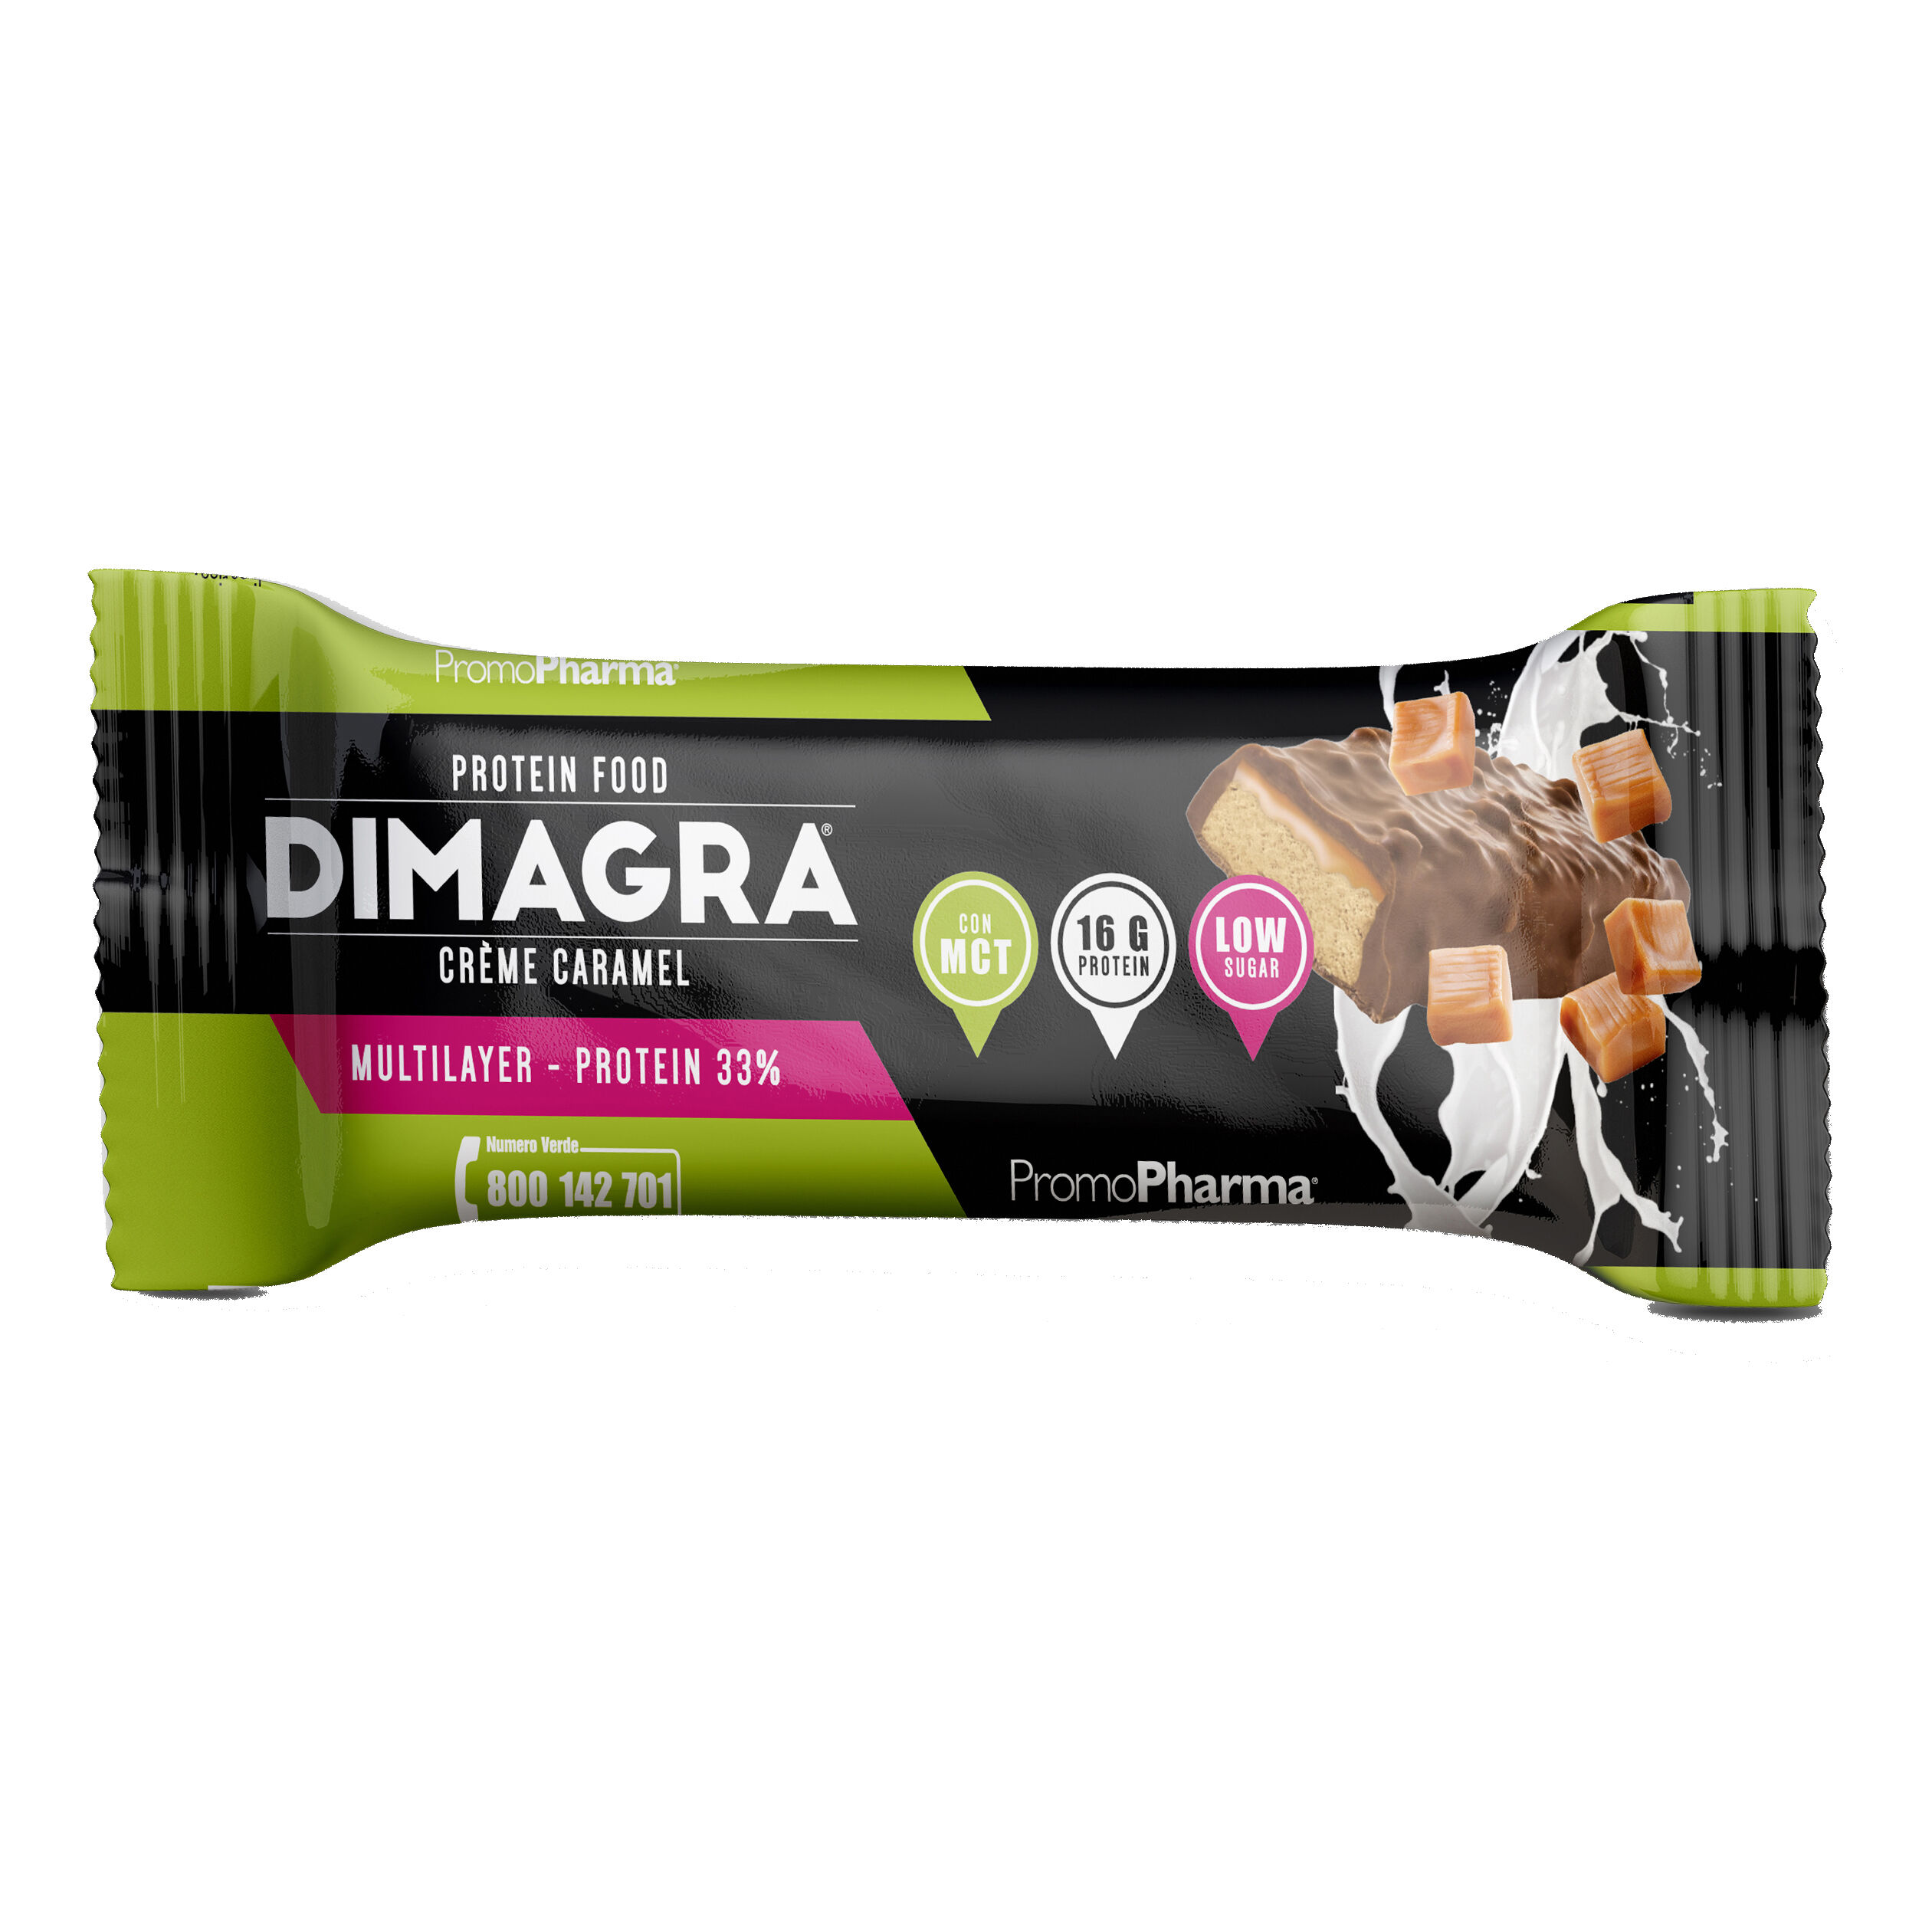 PROMOPHARMA Dimagra protein barretta 33% cream caramel 50 g